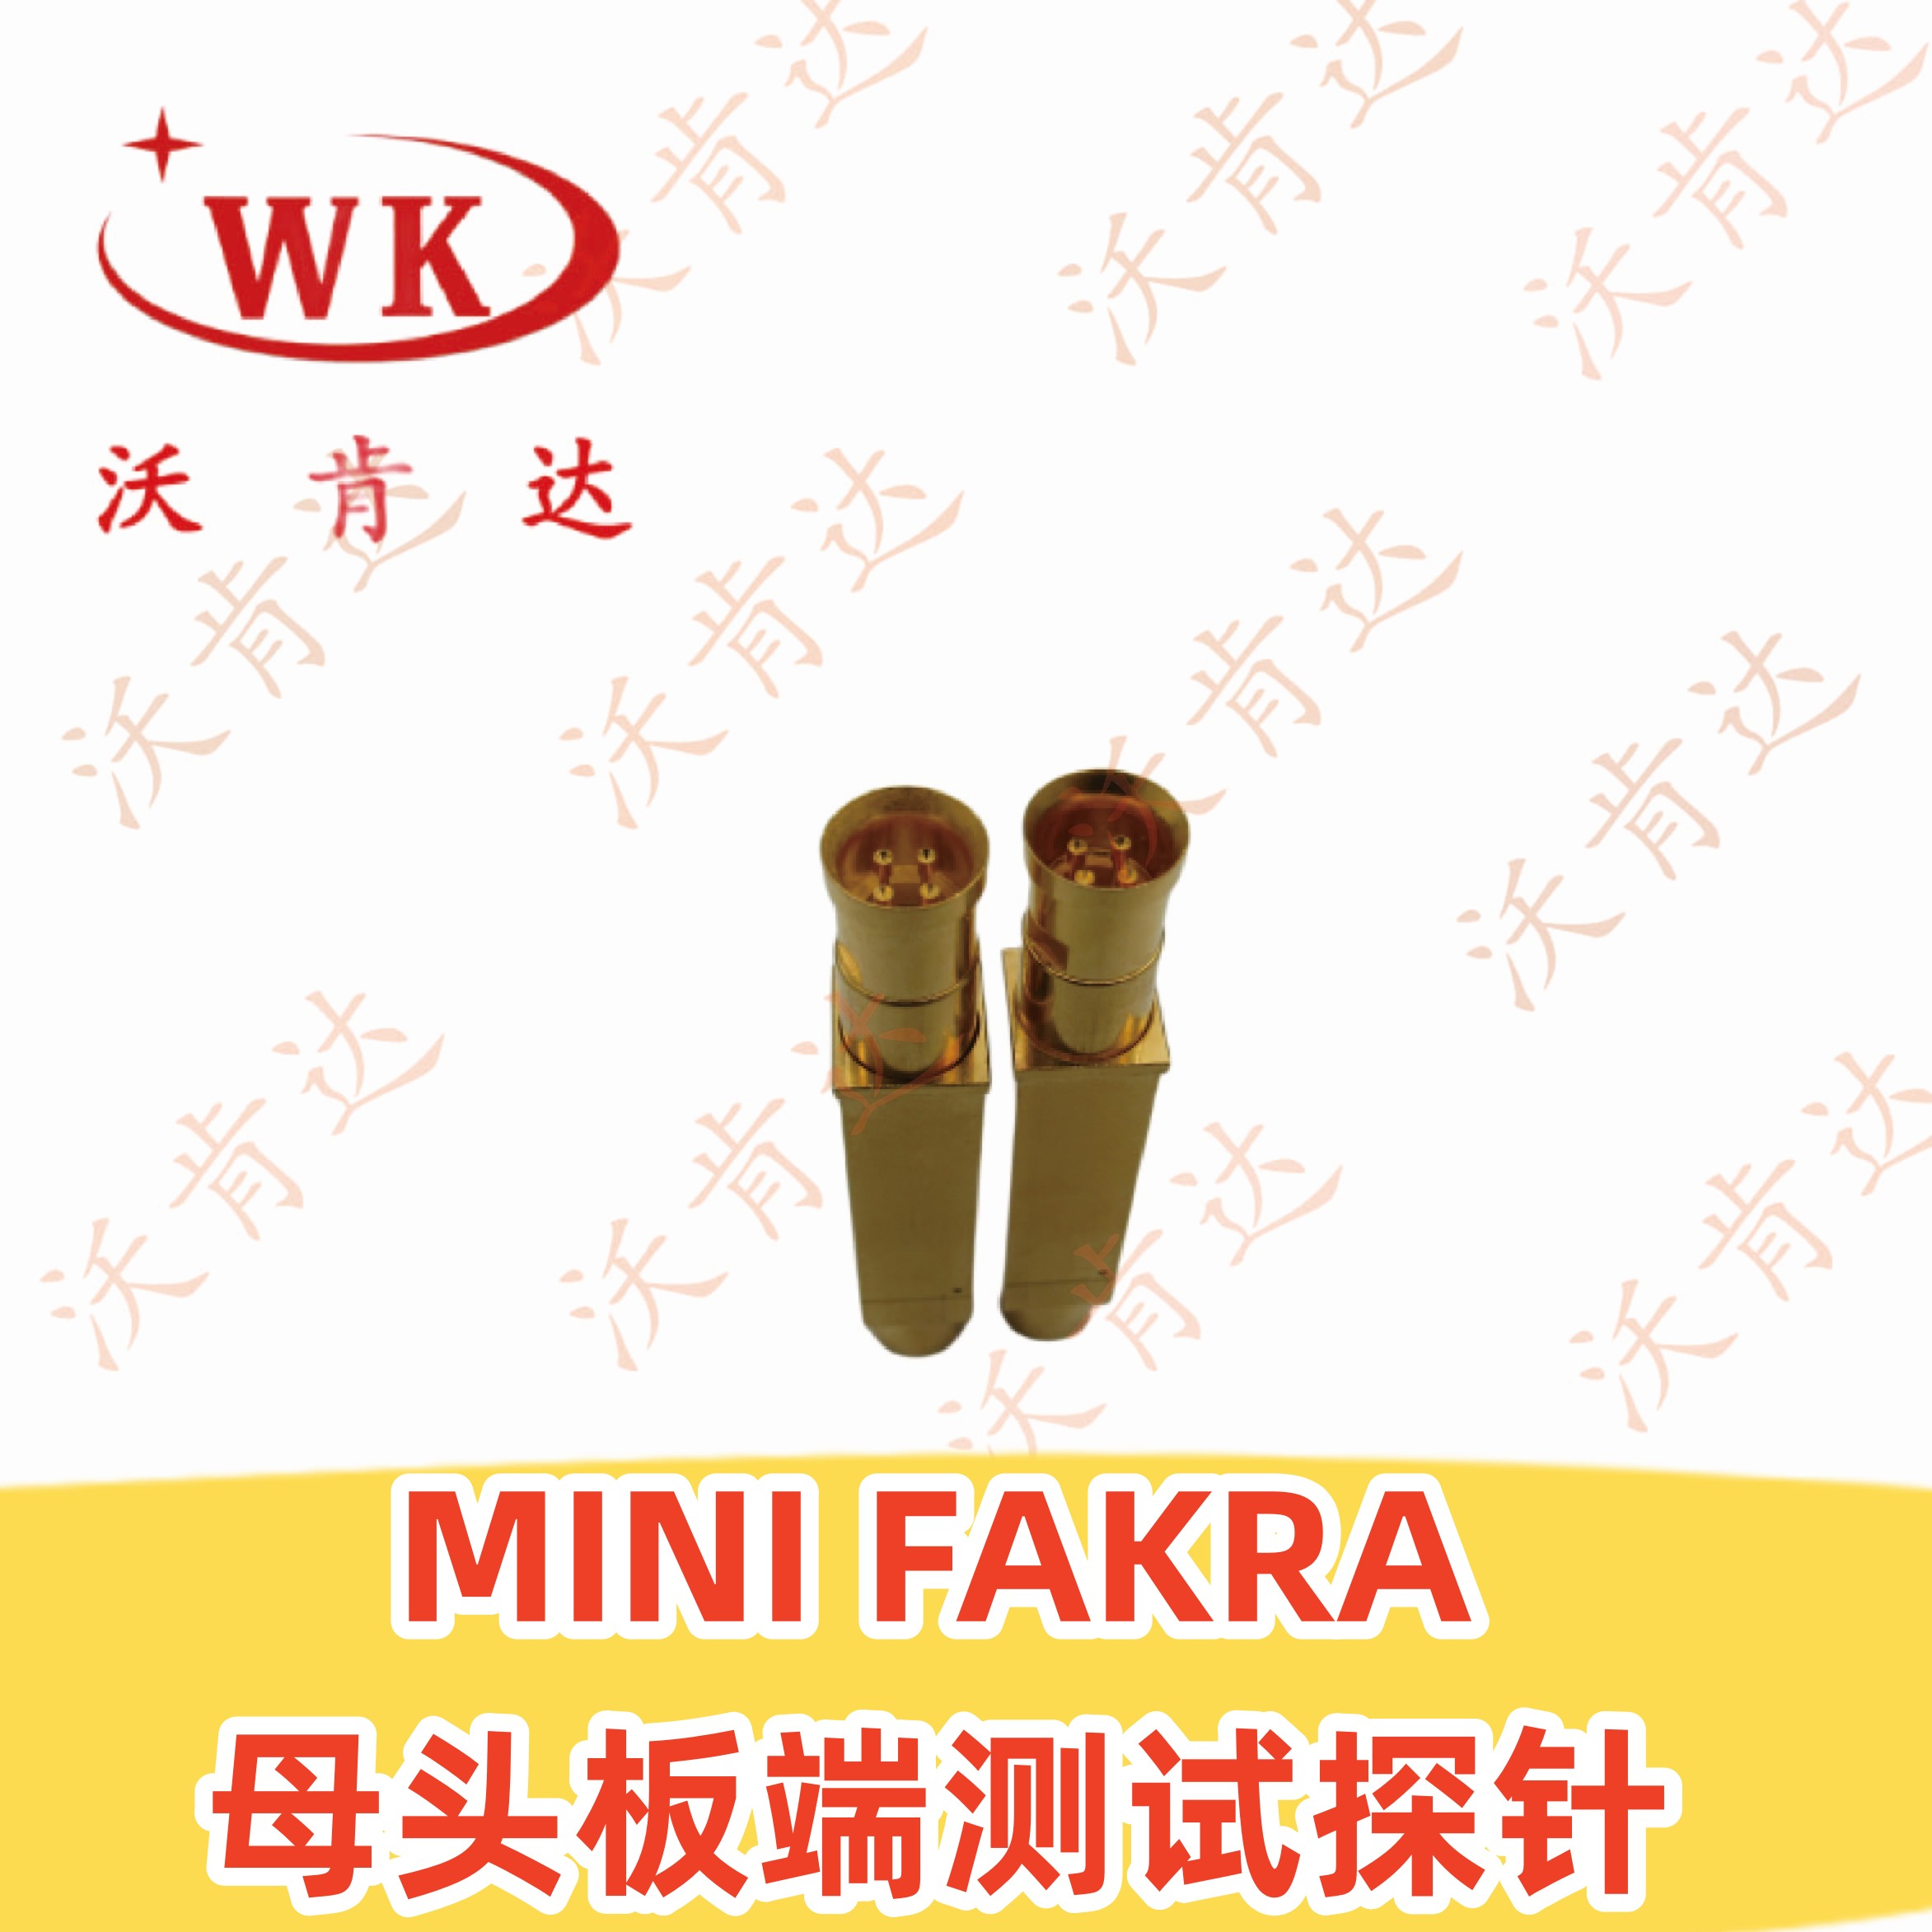 MINI FAKRA 母头板端测射频探针具备高速传输高频信号的能力